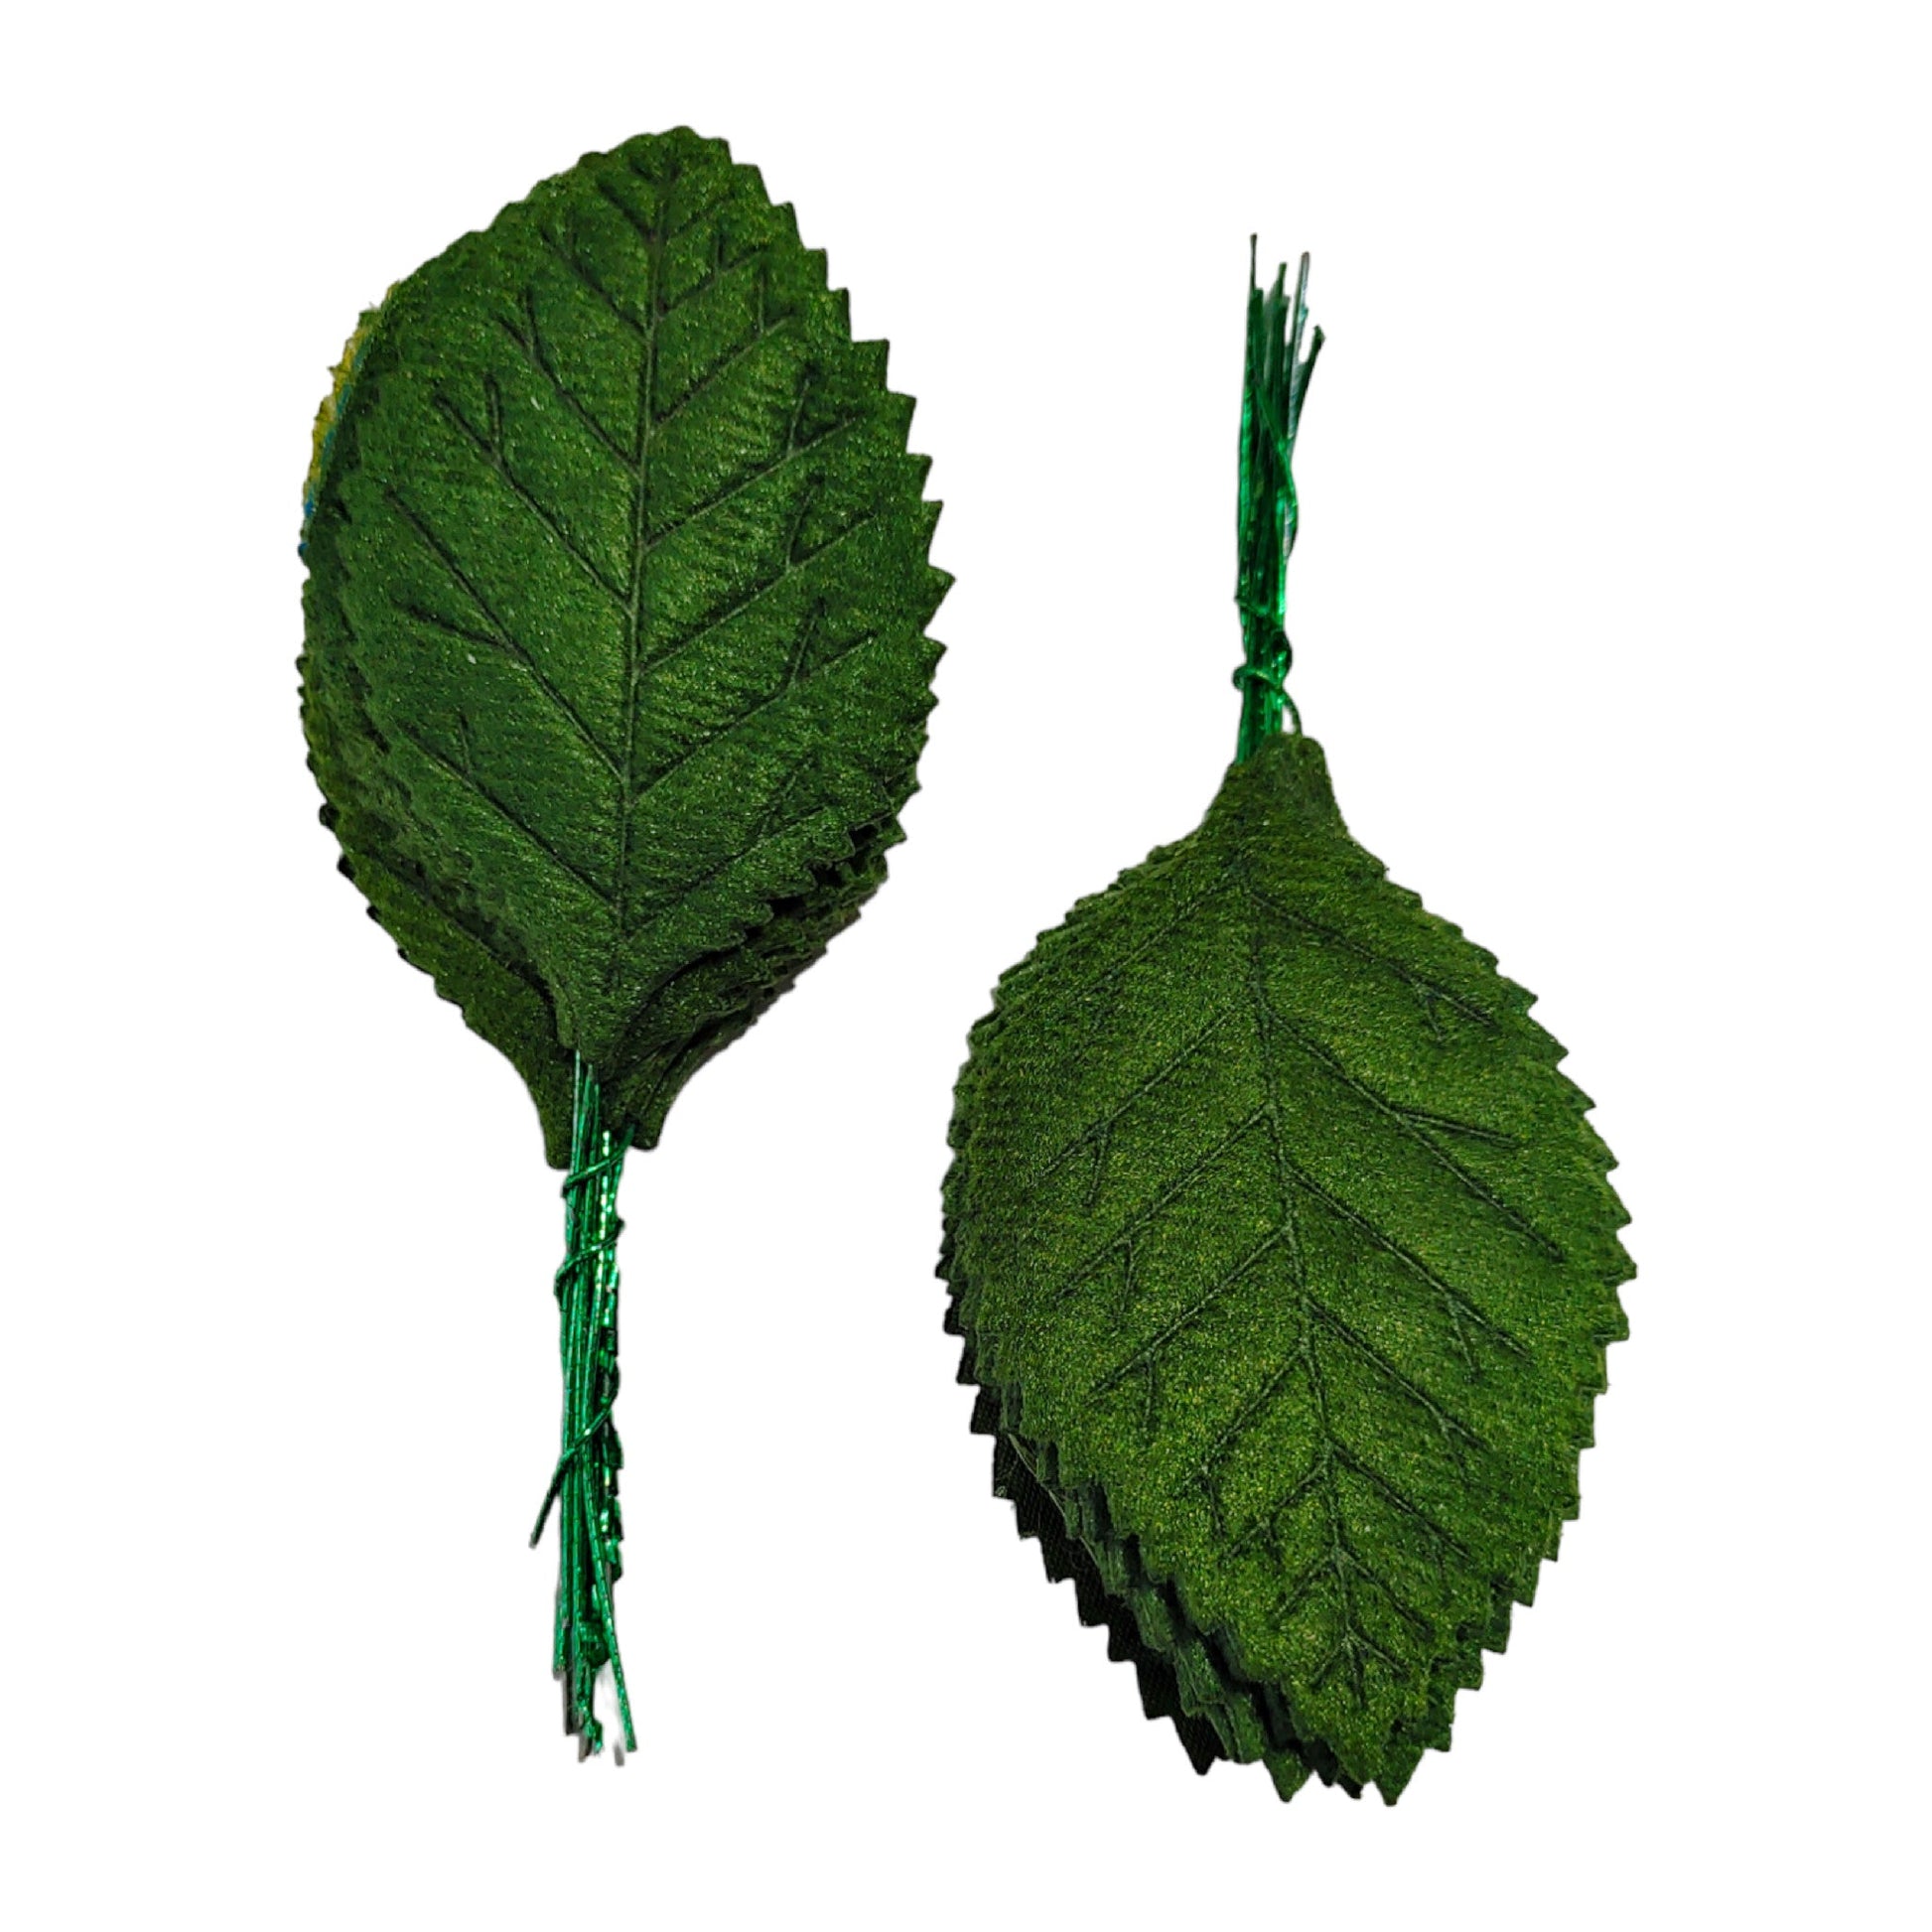 Indian Petals Decorative Artificial Fabric Leaf for Decor, Craft or Textile